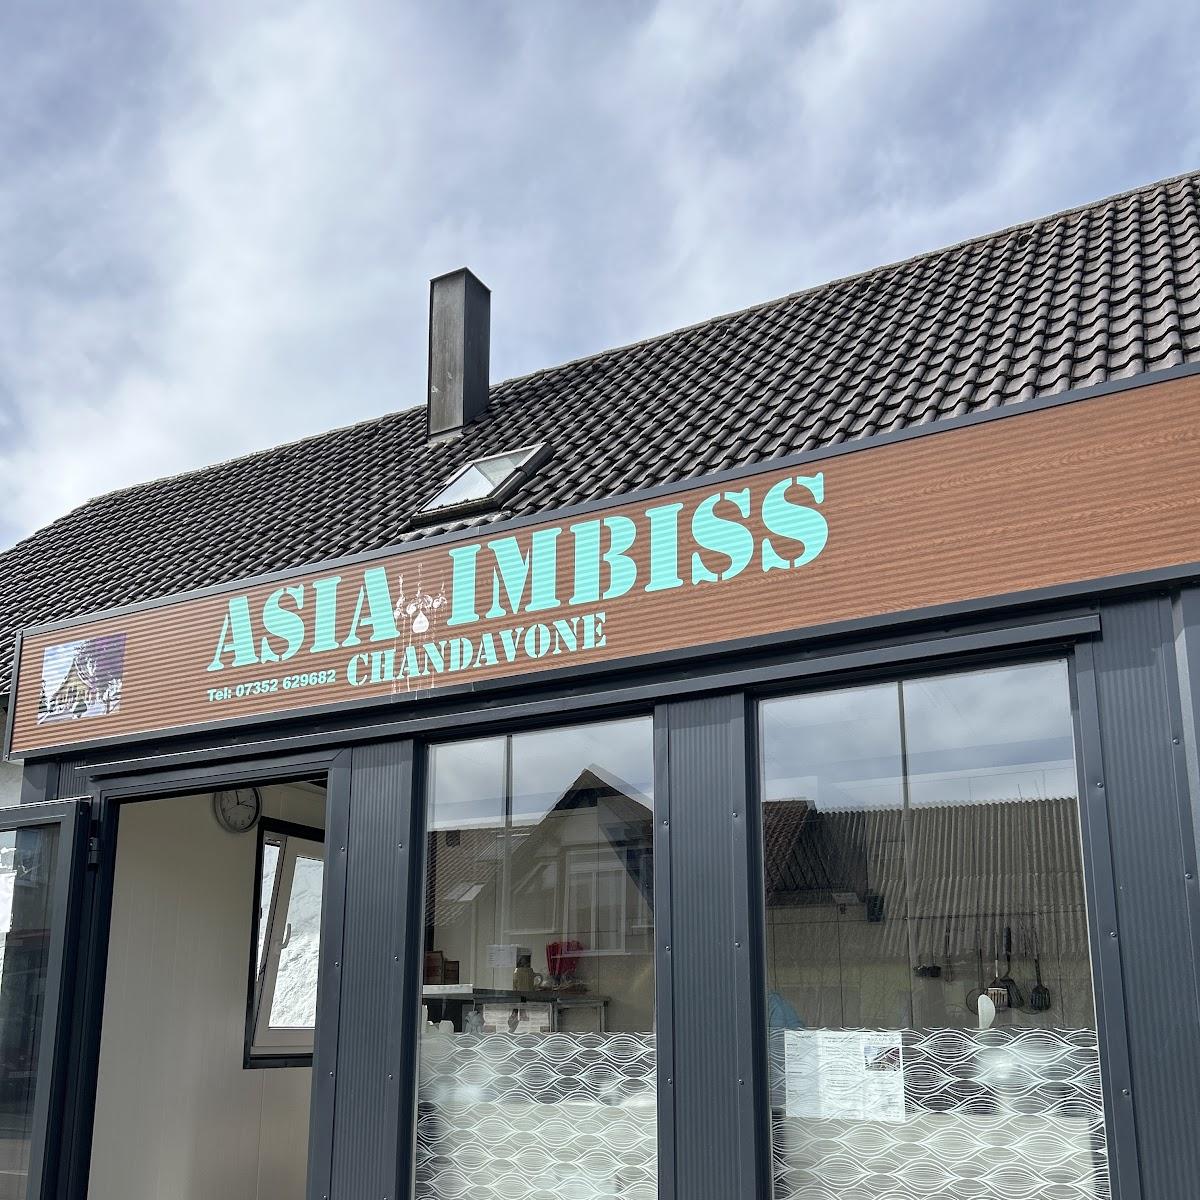 Restaurant "Asia Imbiss Chandavone" in Ochsenhausen